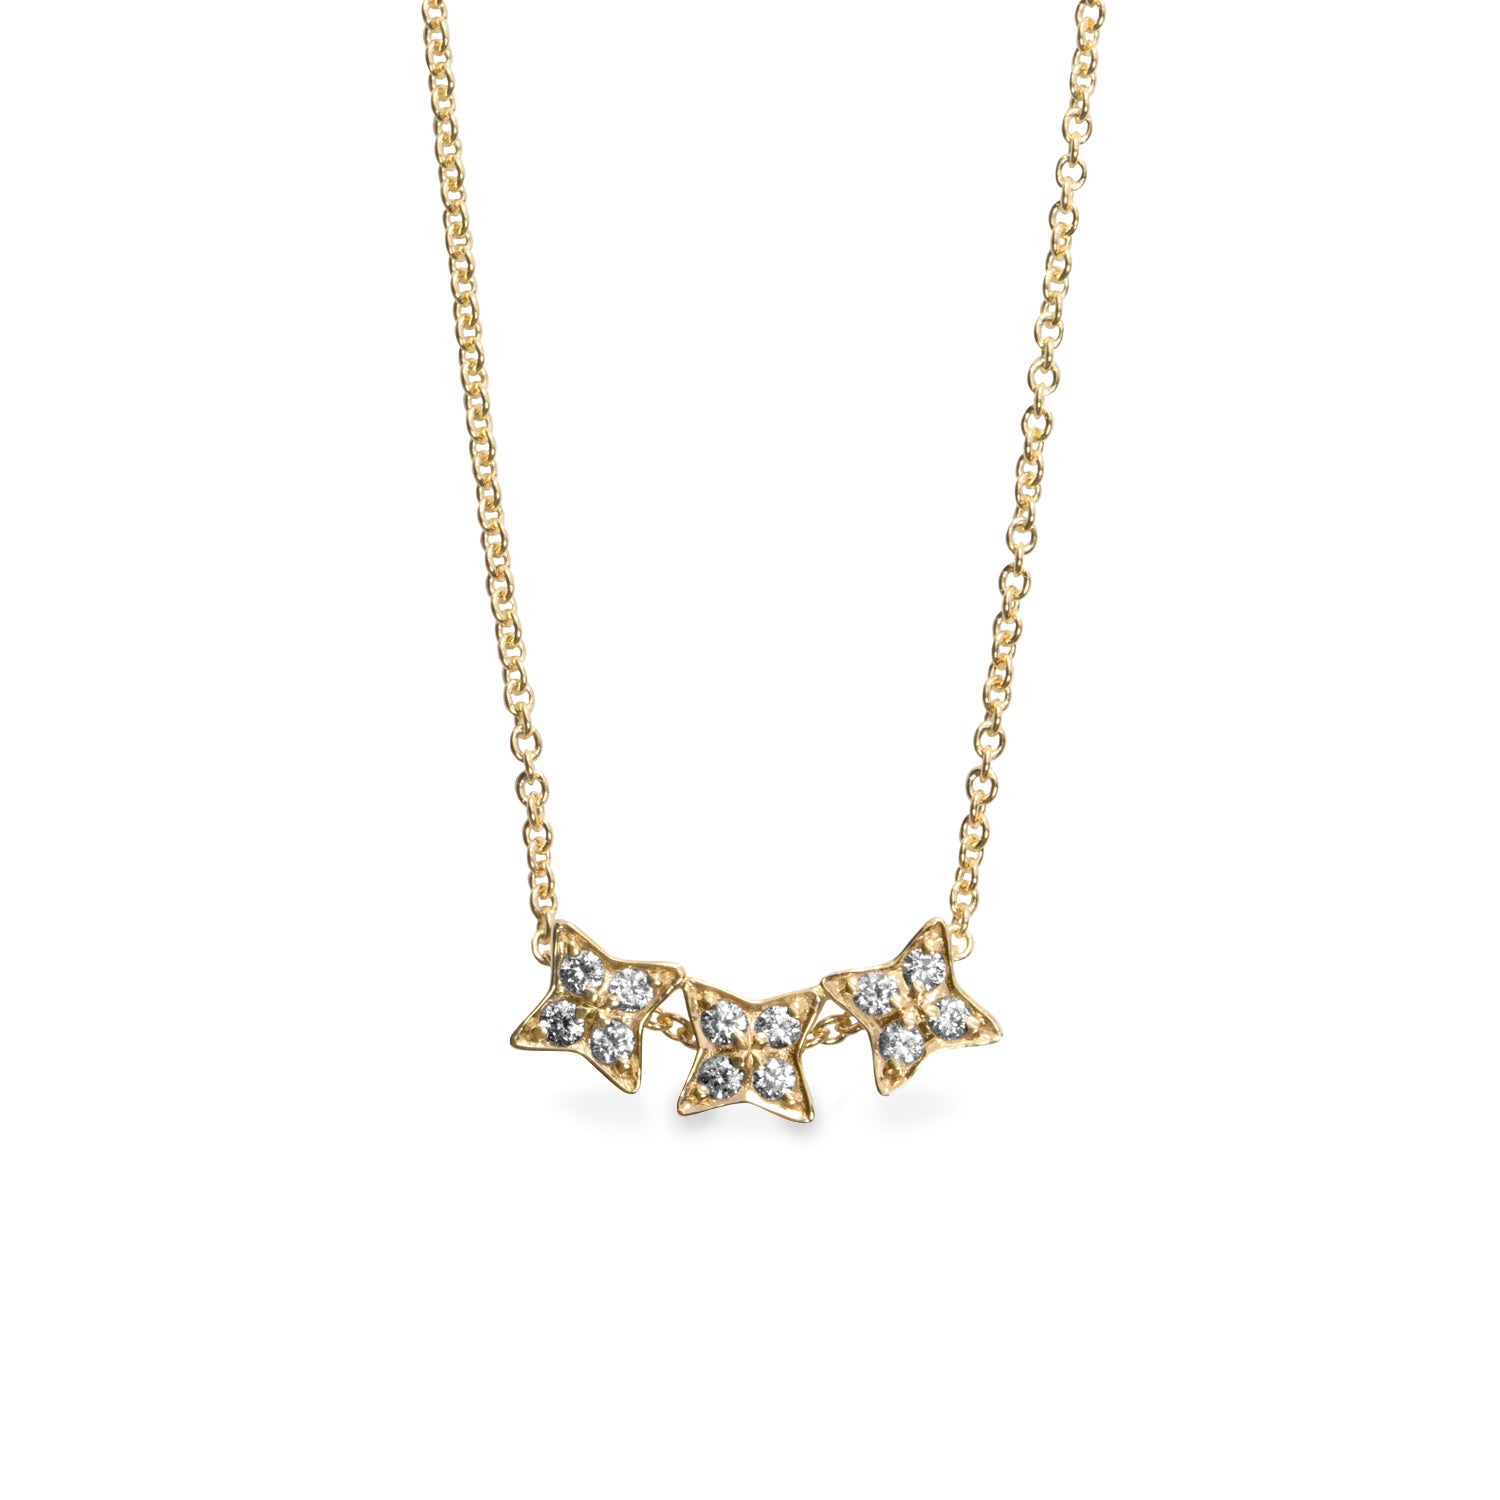 Jupiter necklace - 3 stars of diamonds